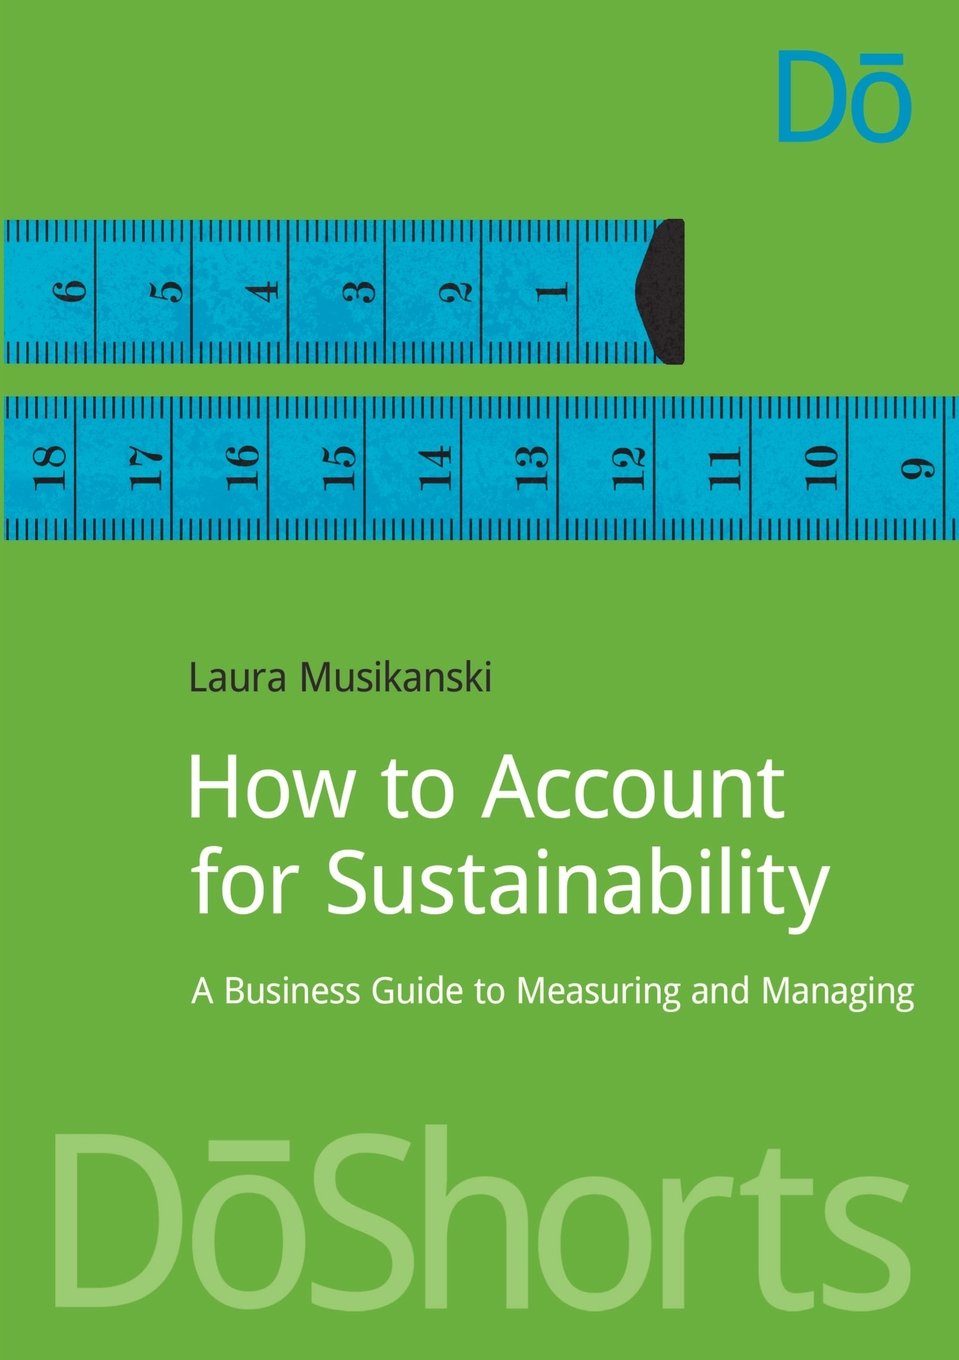 How to Account for Sustainability (Laura Musikanski)